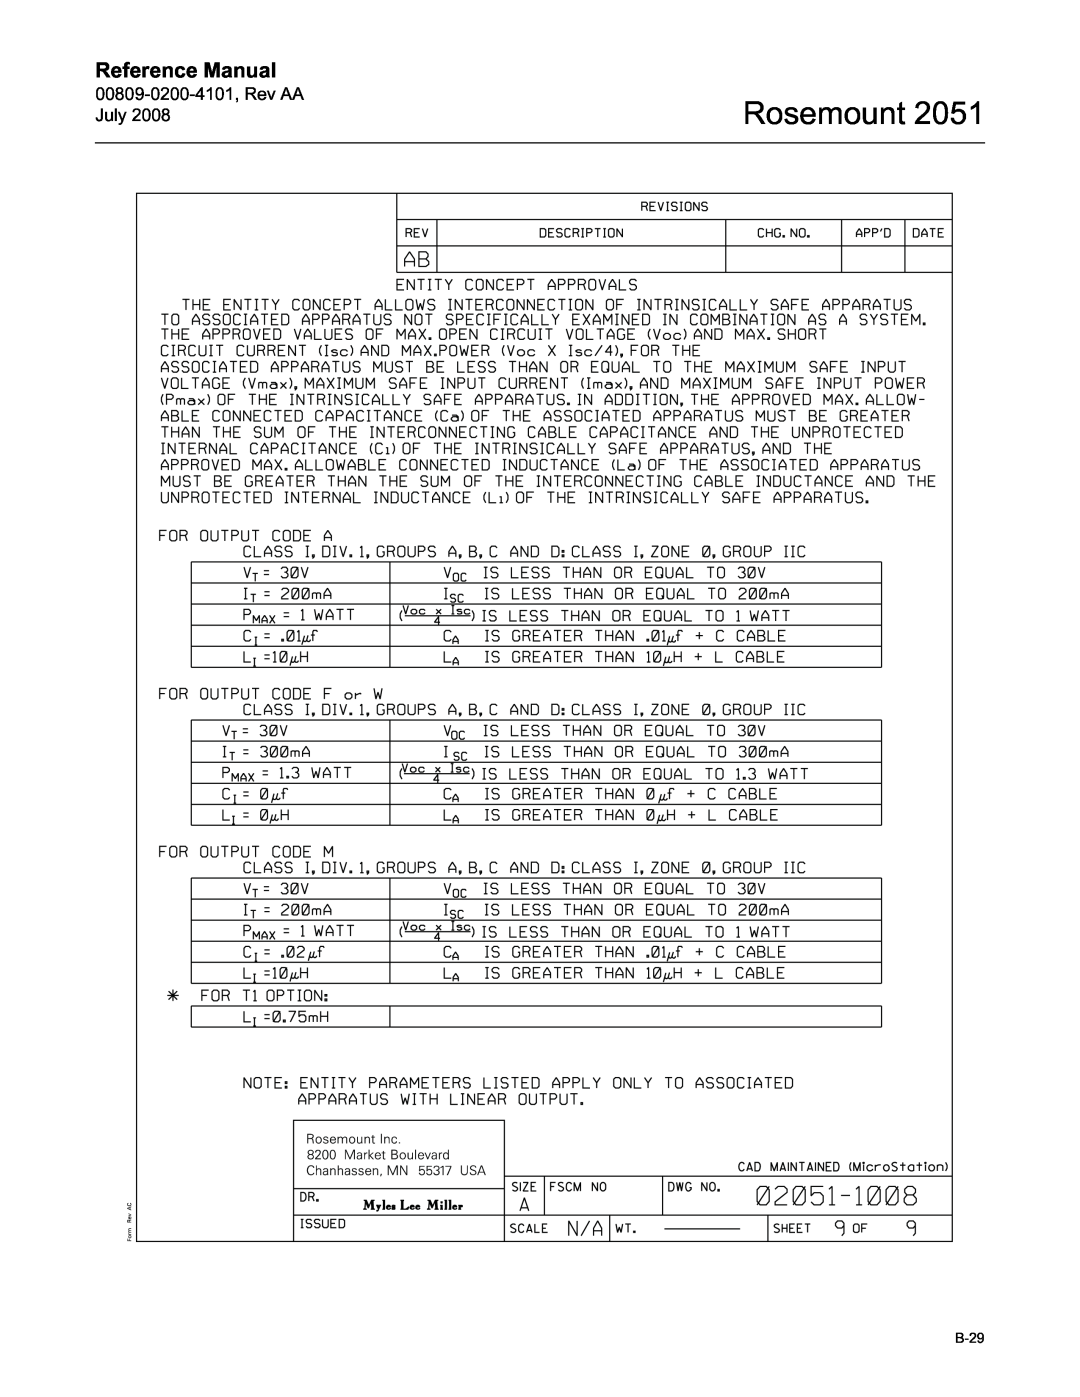 Emerson Process Management 2051 manual Rosemount, Reference Manual, B-29 